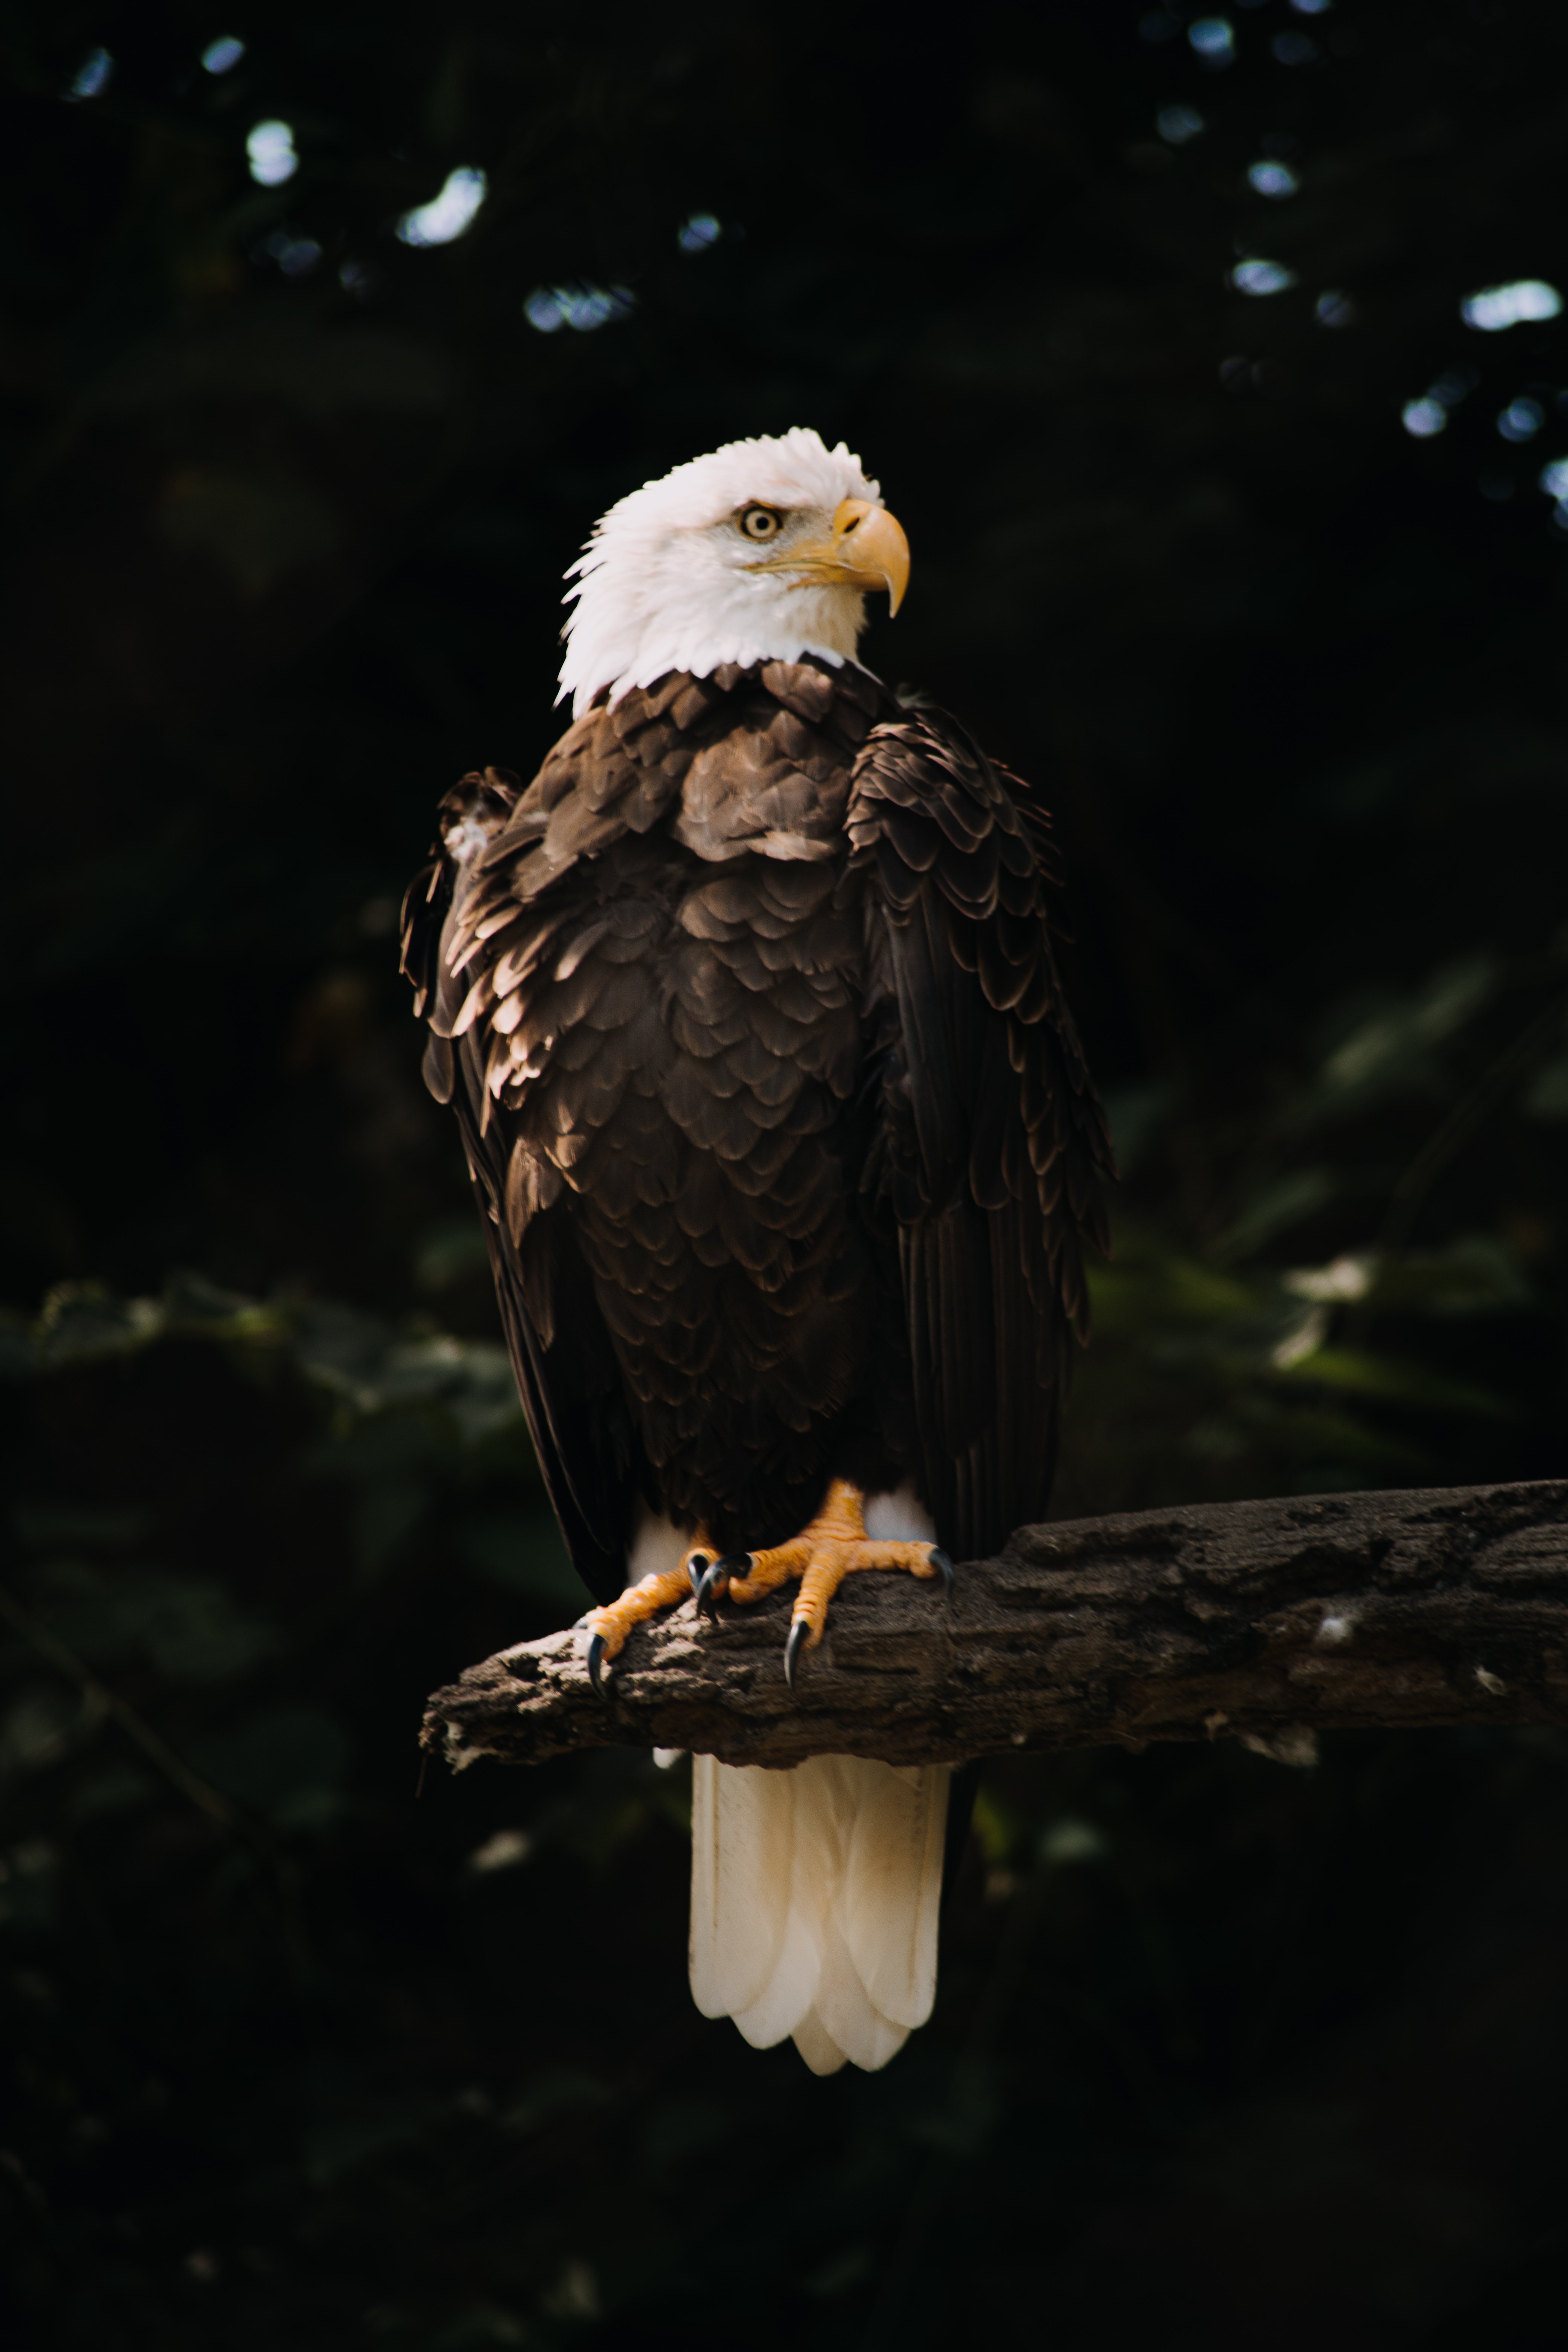 Popular Bald Eagle Image for Phone